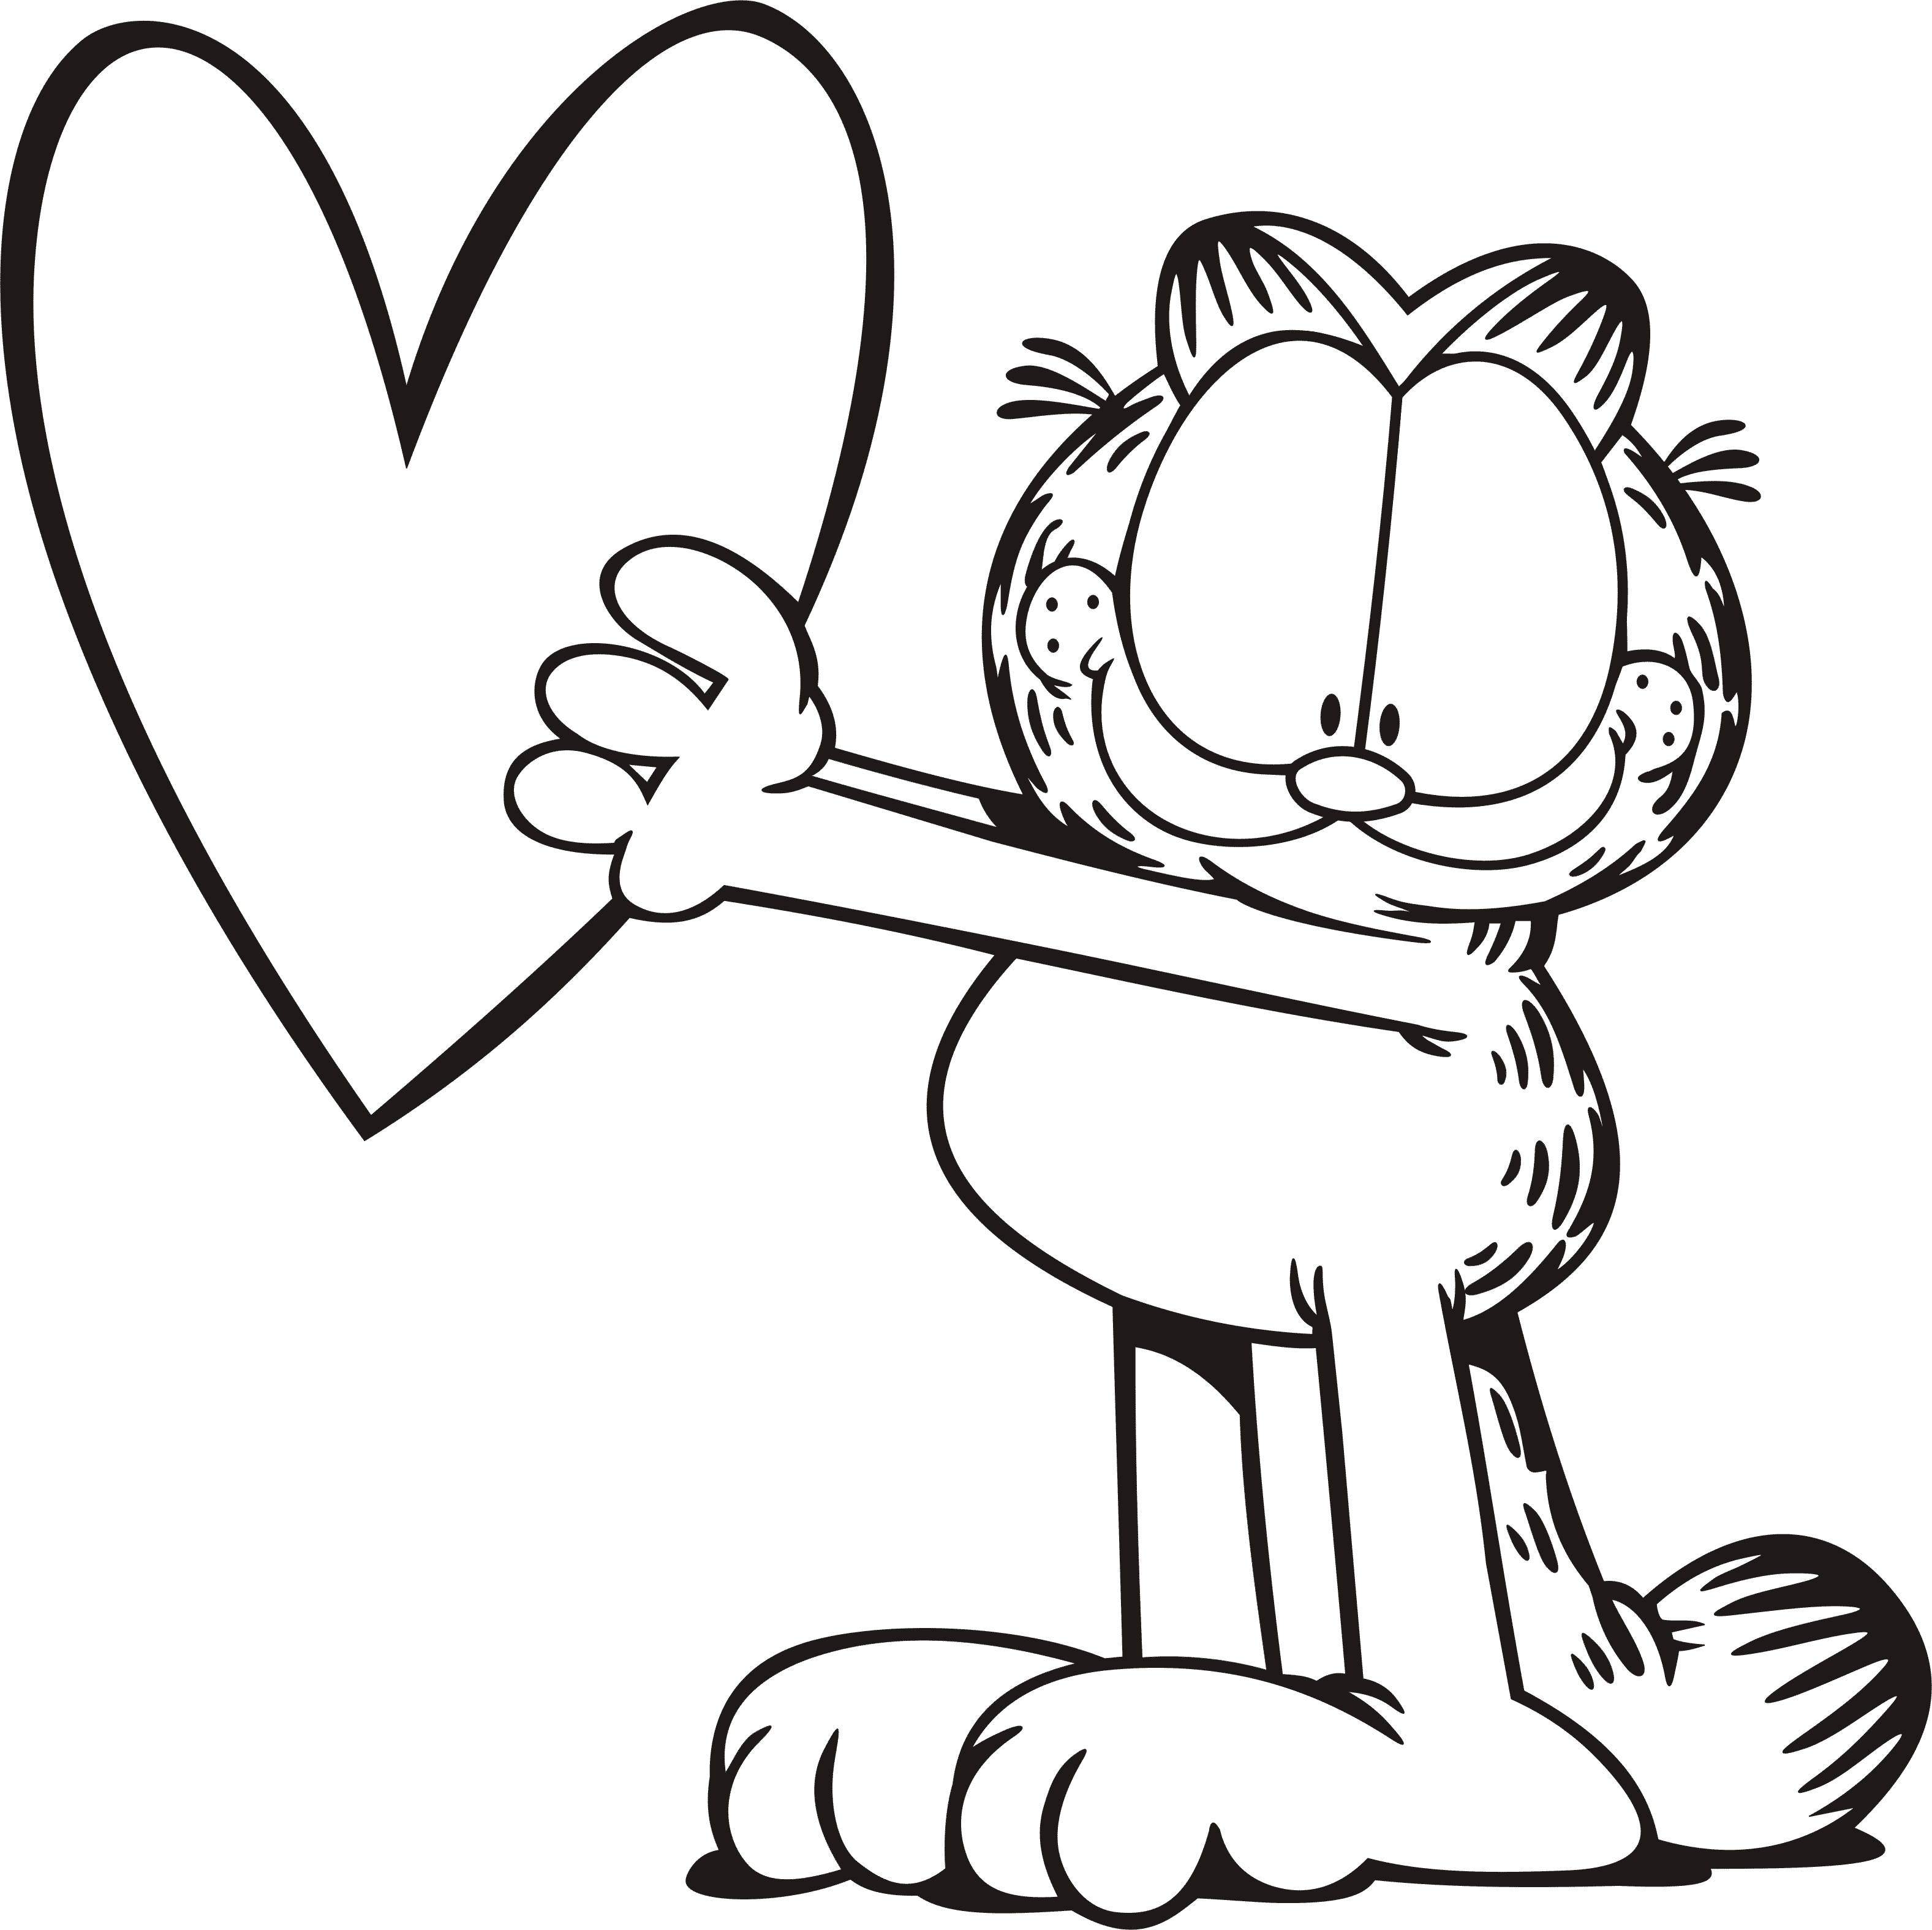 Раскраски про приключения кота Гарфилда для детей  Гарфилд с сердечком